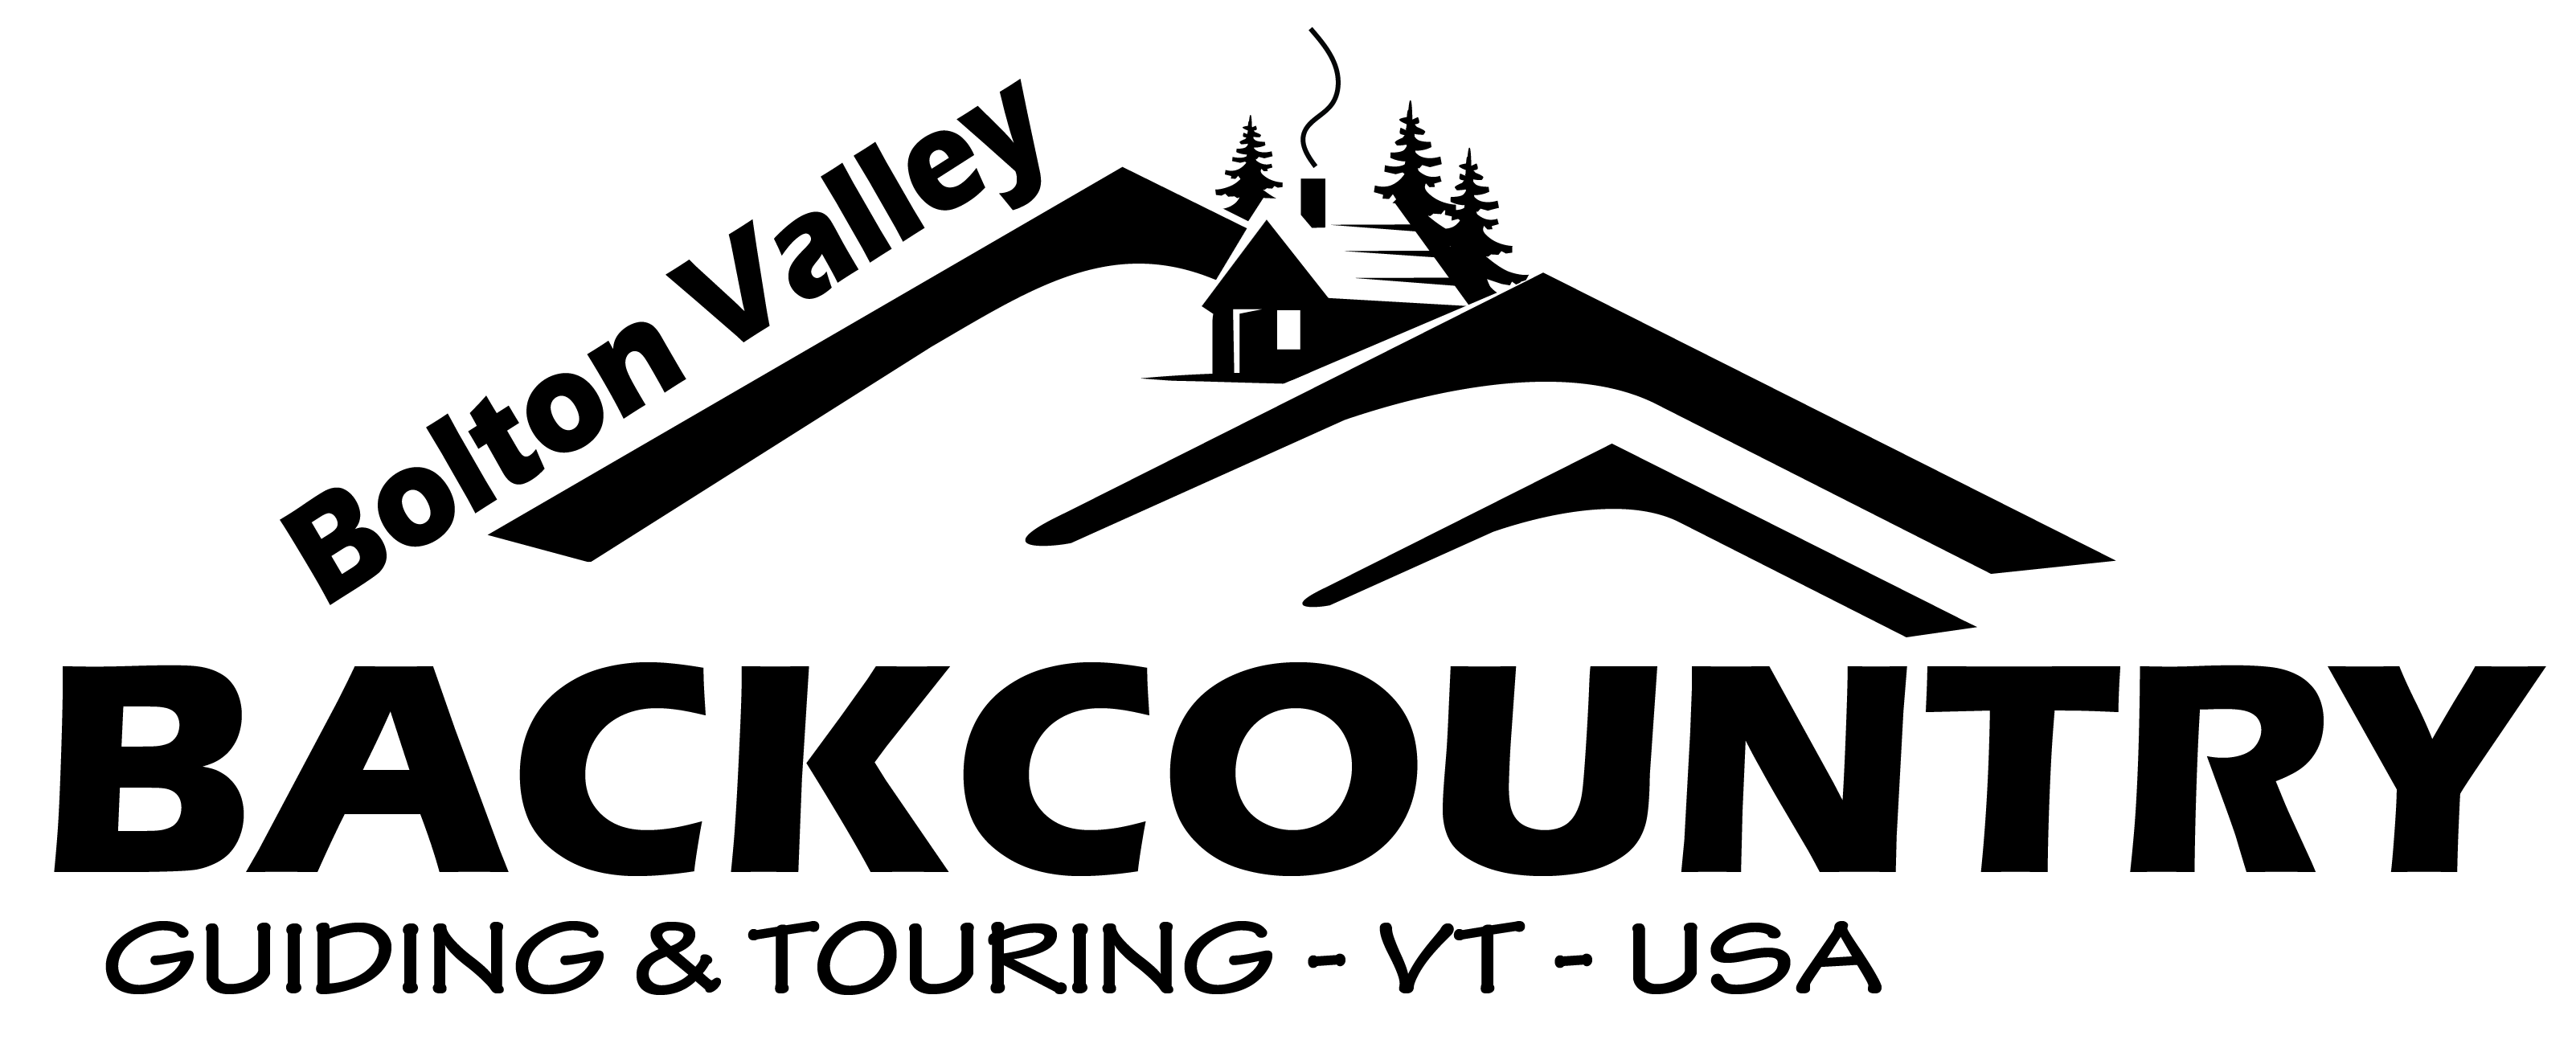 Backcountry Logo - Bolton Backcountry skiing and riding